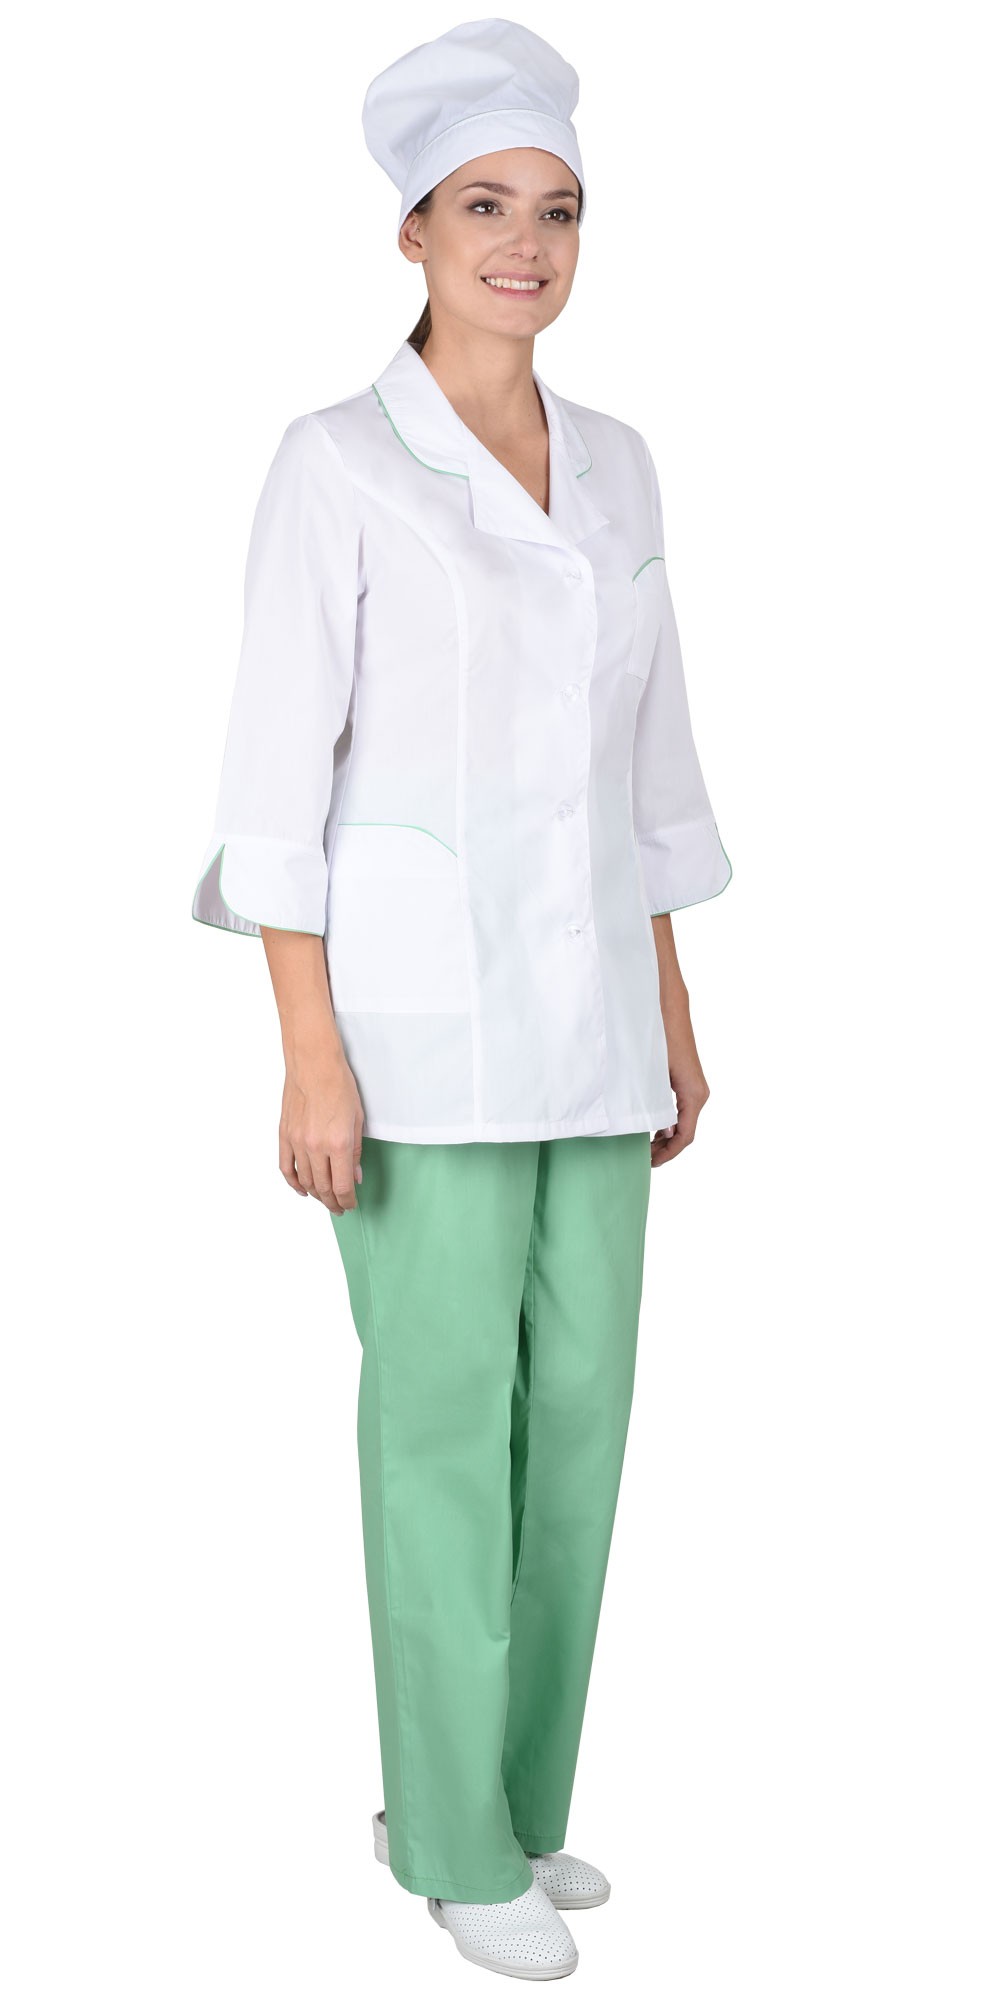 Медицинский костюм “СИРИУС-ЖАСМИН” женский белый с салатовым Артикул: 08131